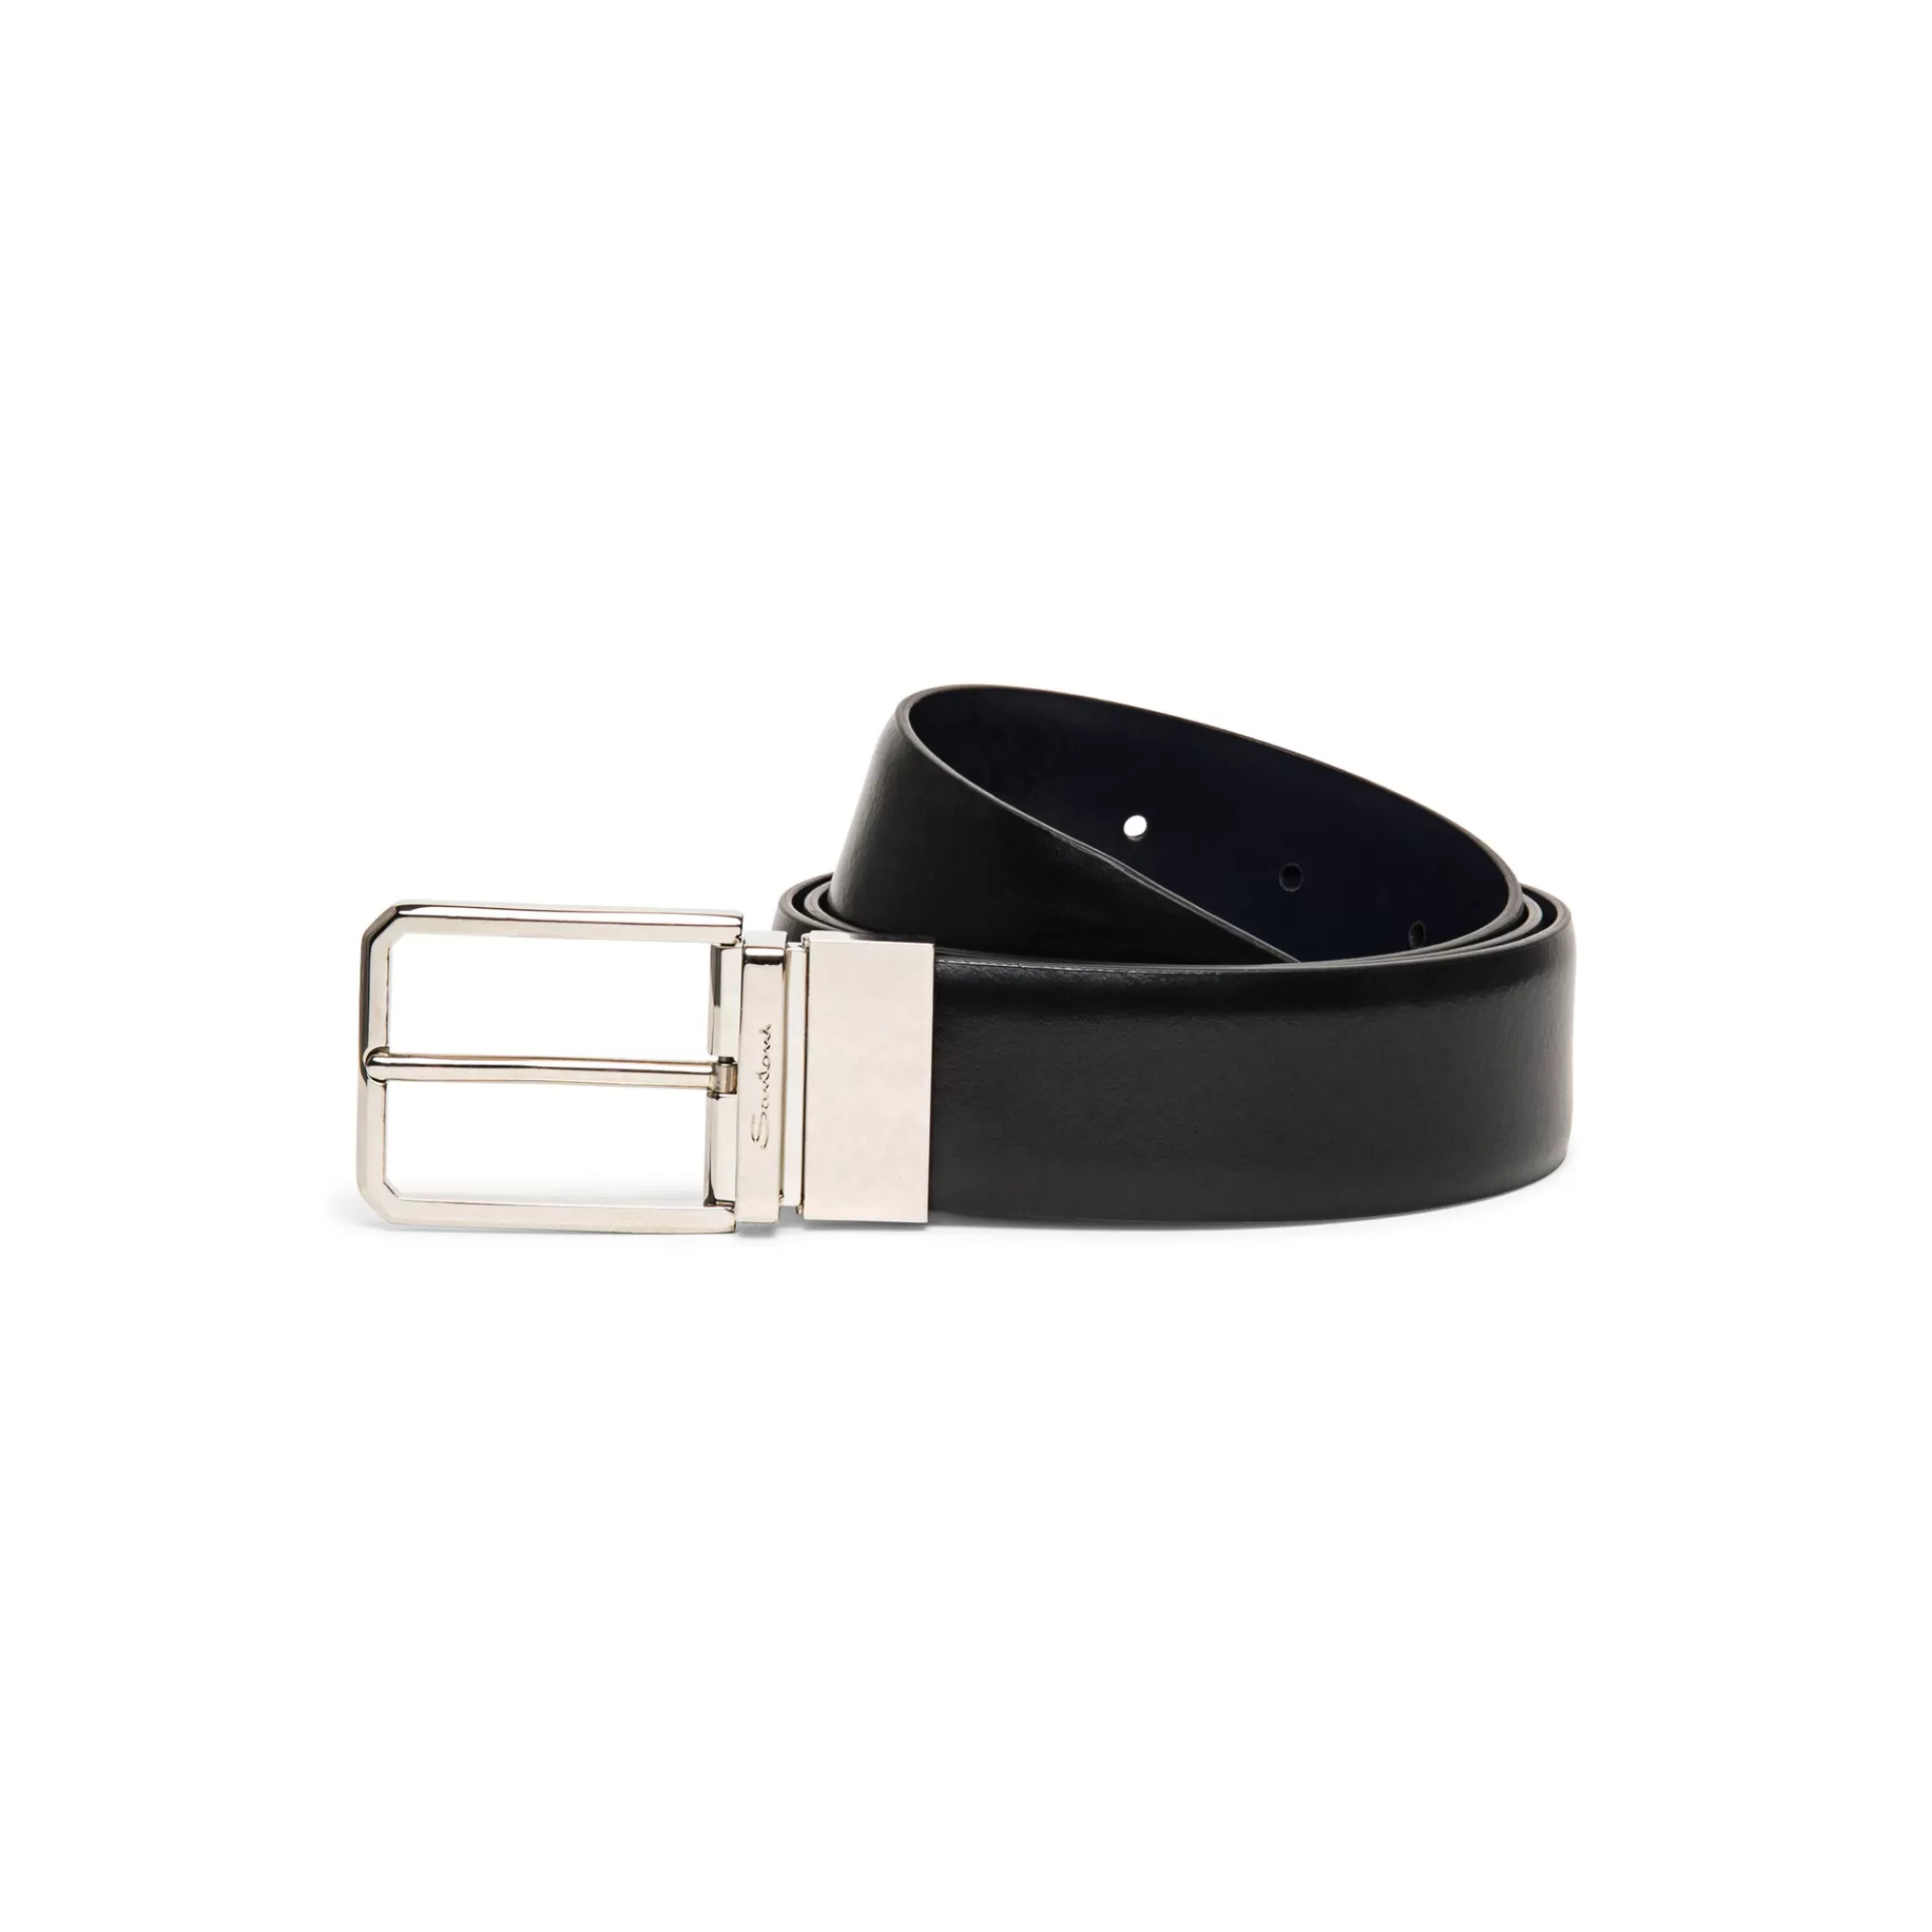 Cheap Cintura regolabile e reversibile in pelle nera e blu Cinture